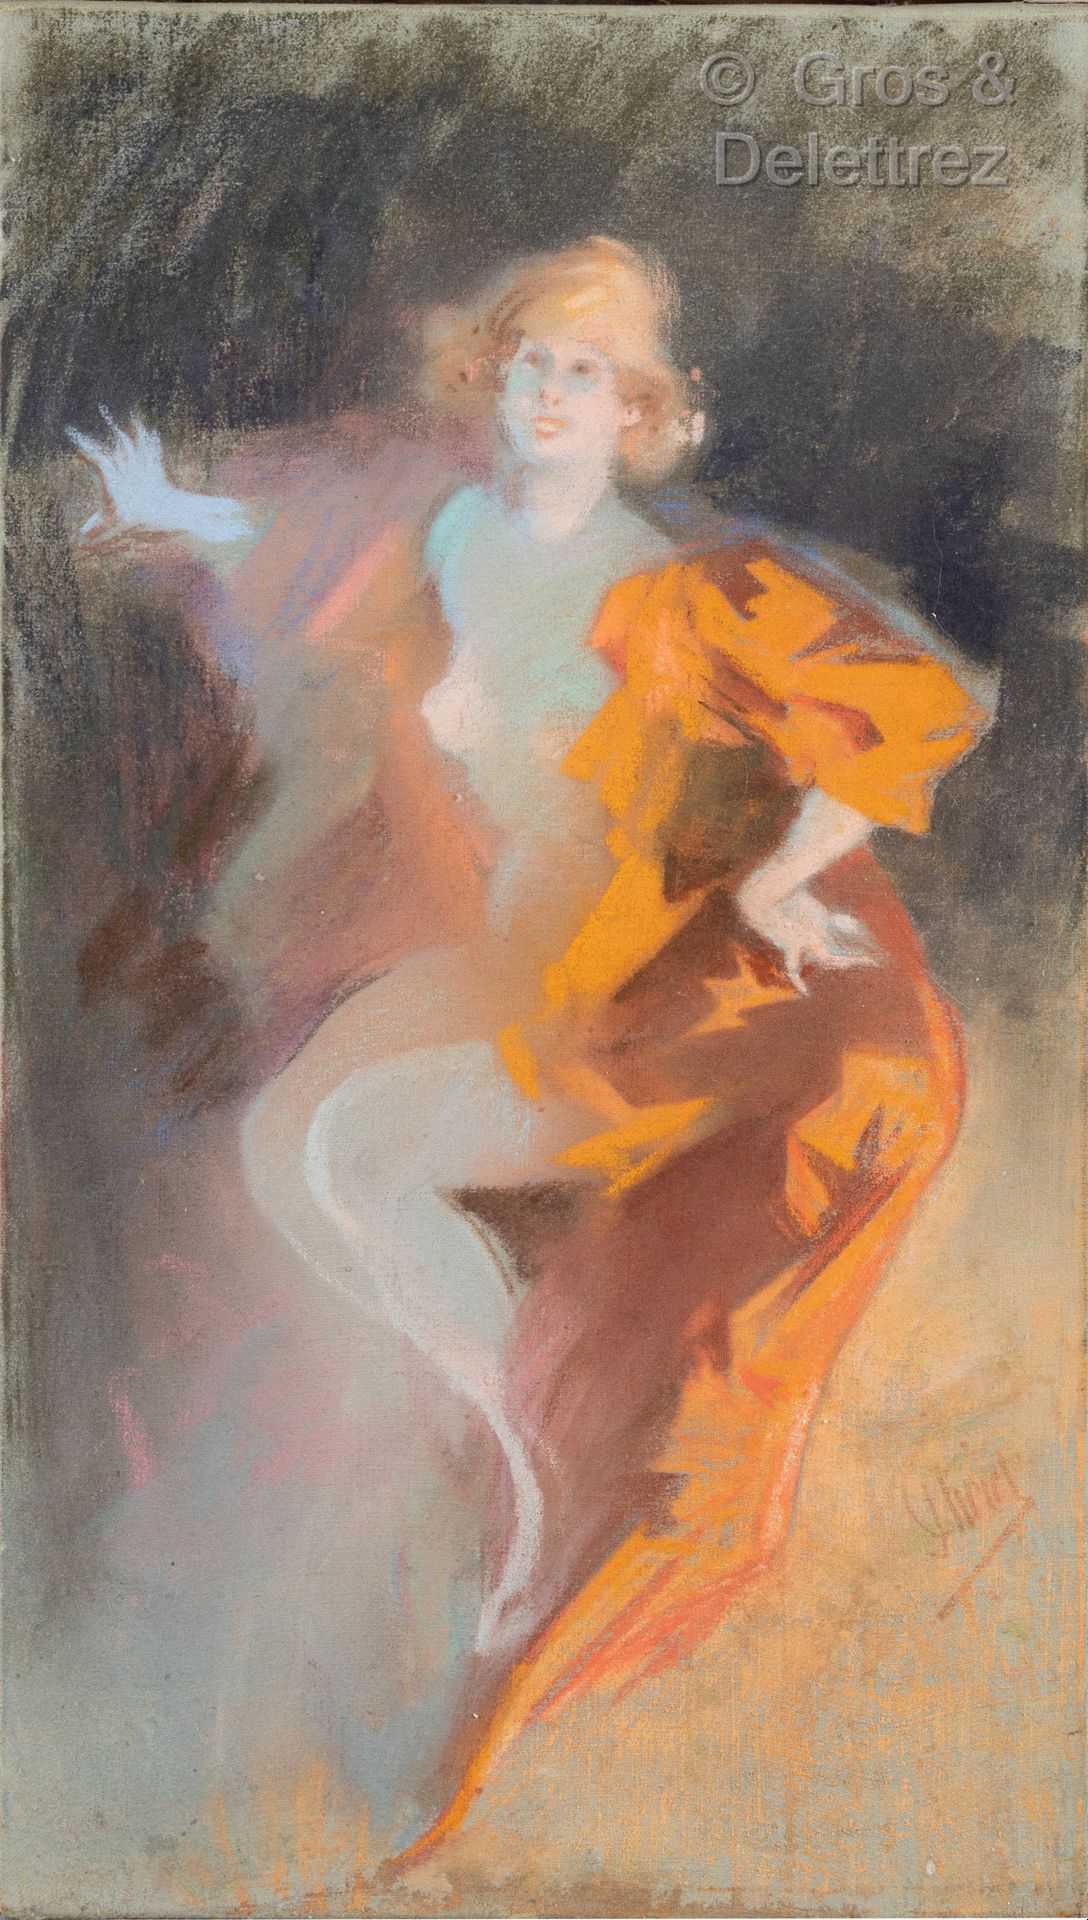 Jules CHÉRET (1836-1932) Junge Frau mit orangefarbenem Vorhang

Pastell auf Lein&hellip;